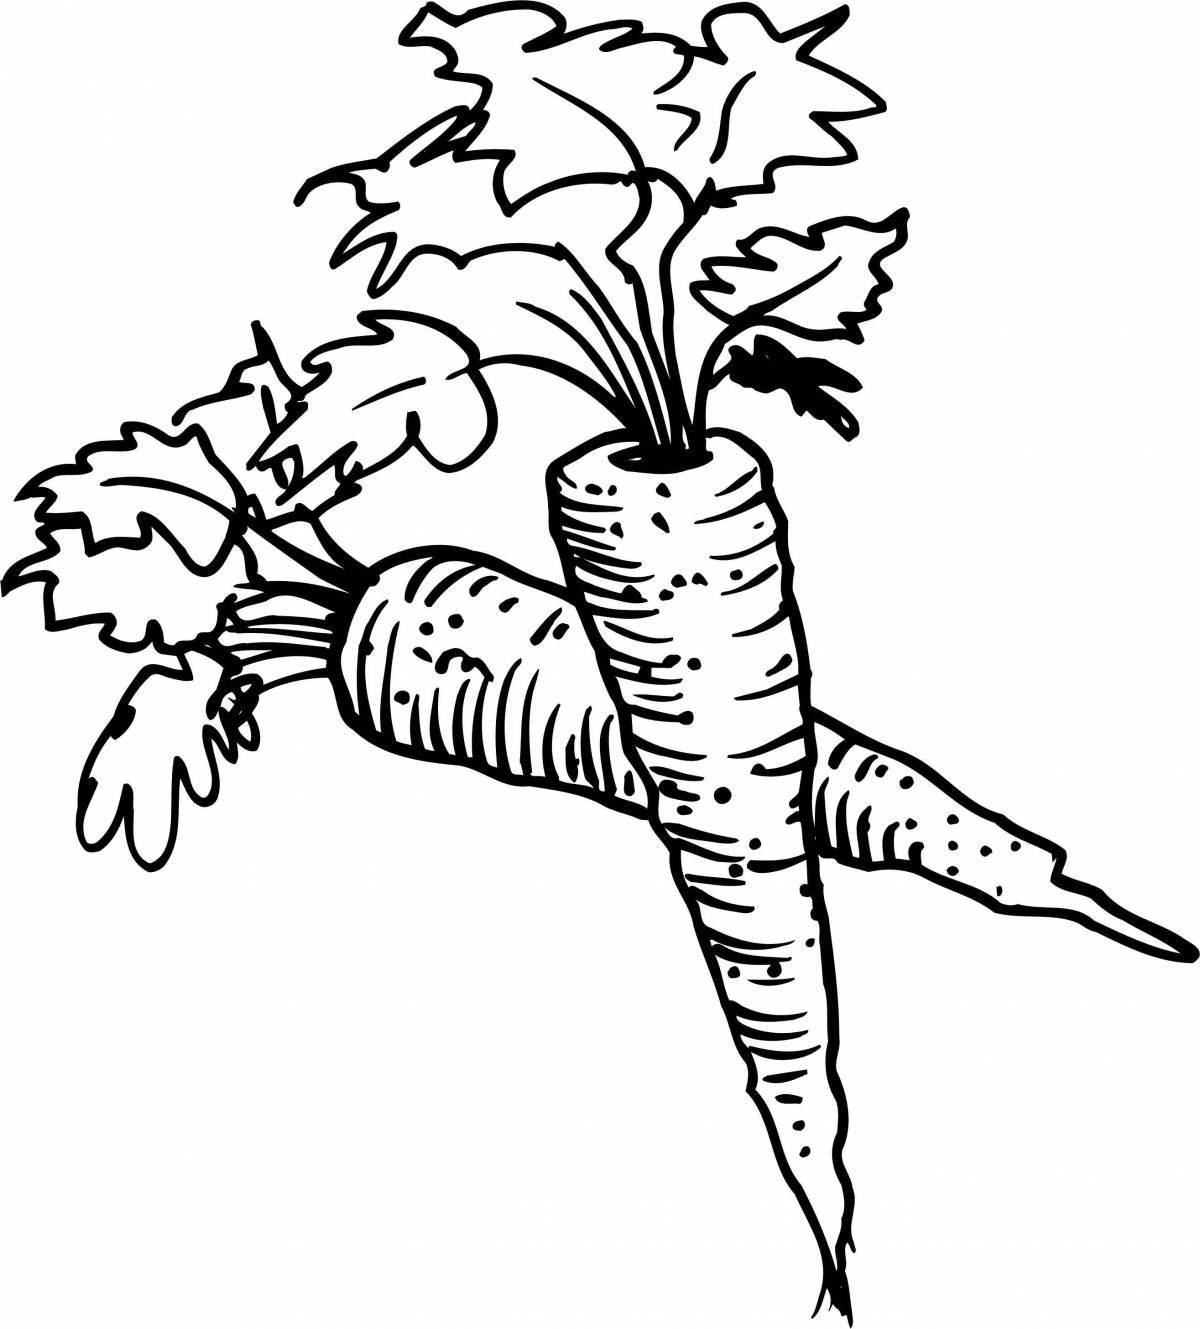 Fun carrot drawing for kids